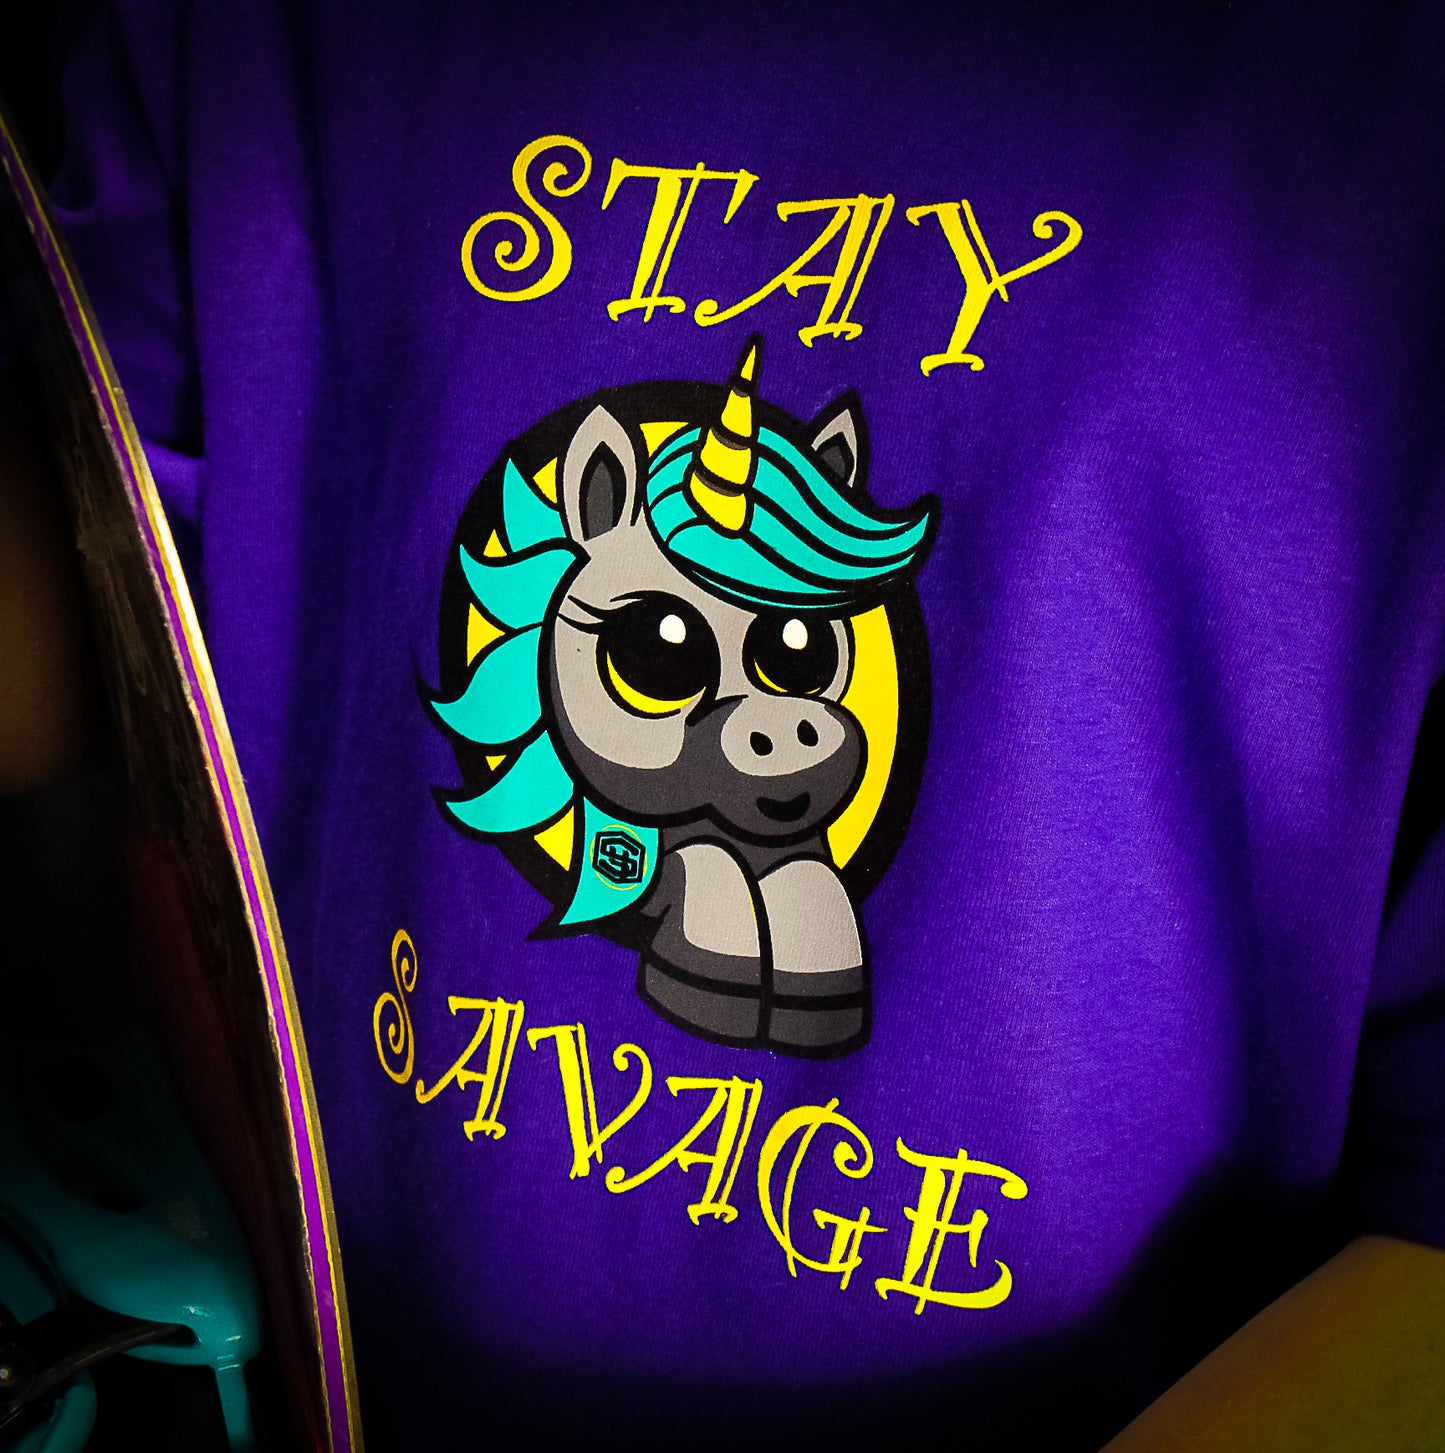 "Stay Savage" Tee